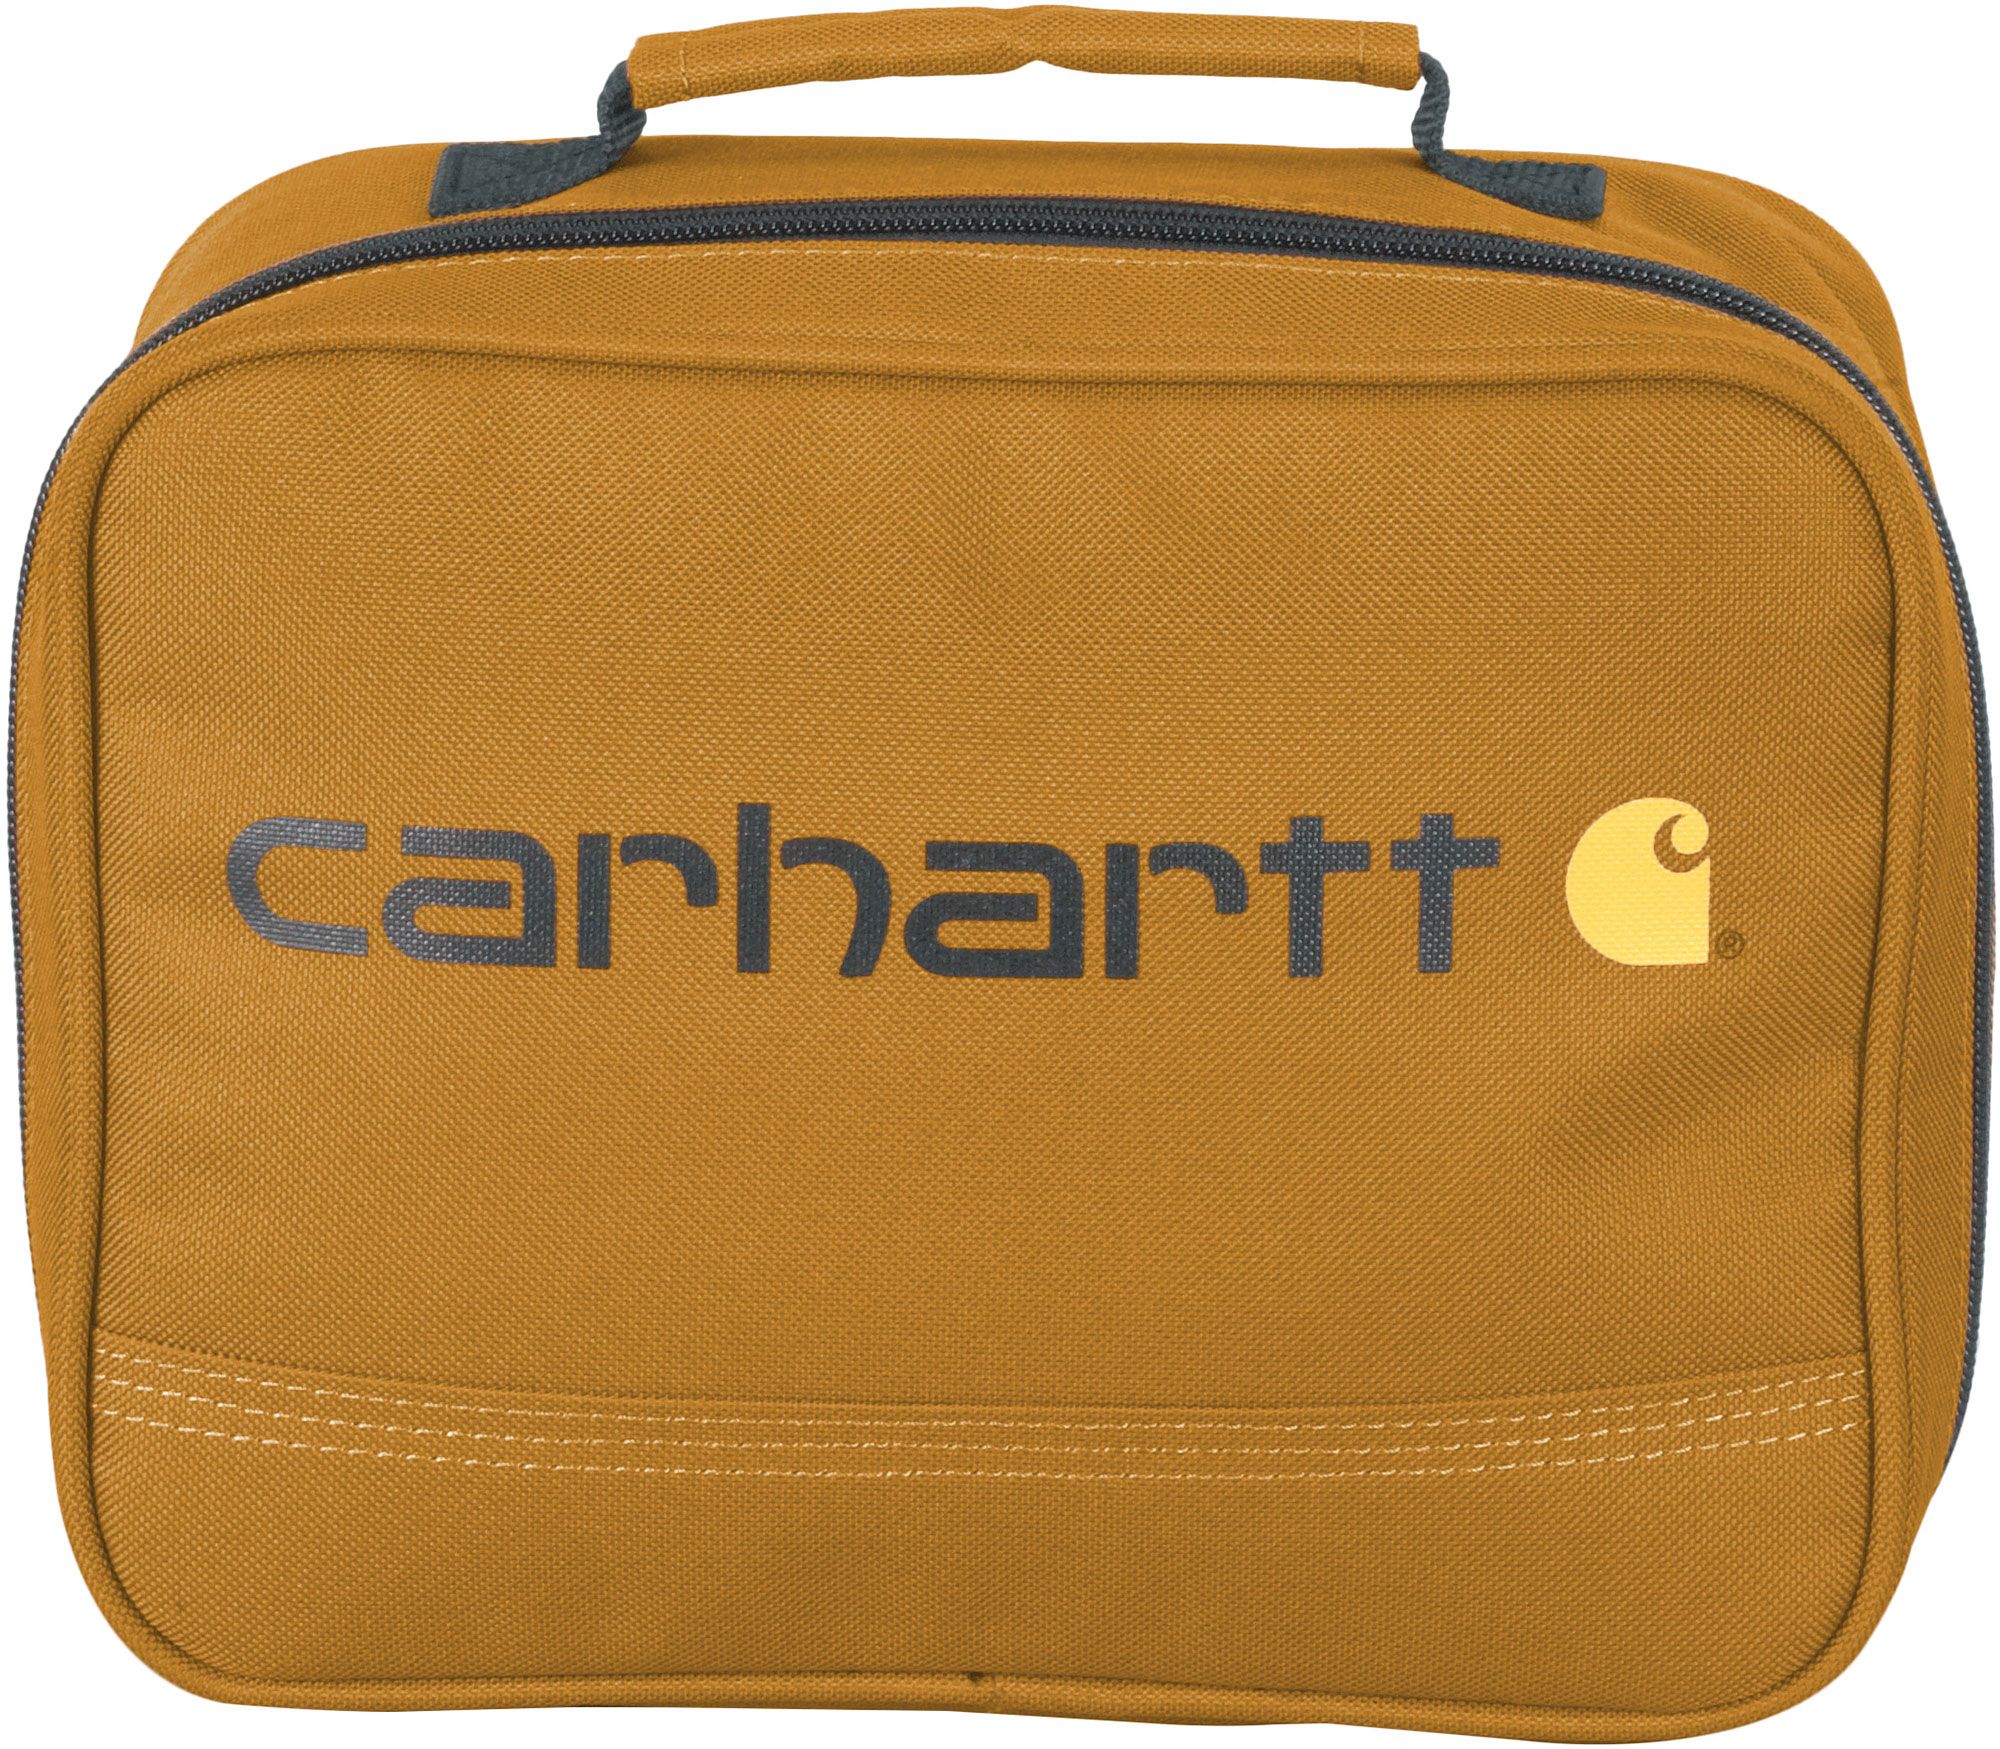 carhartt lunch bag